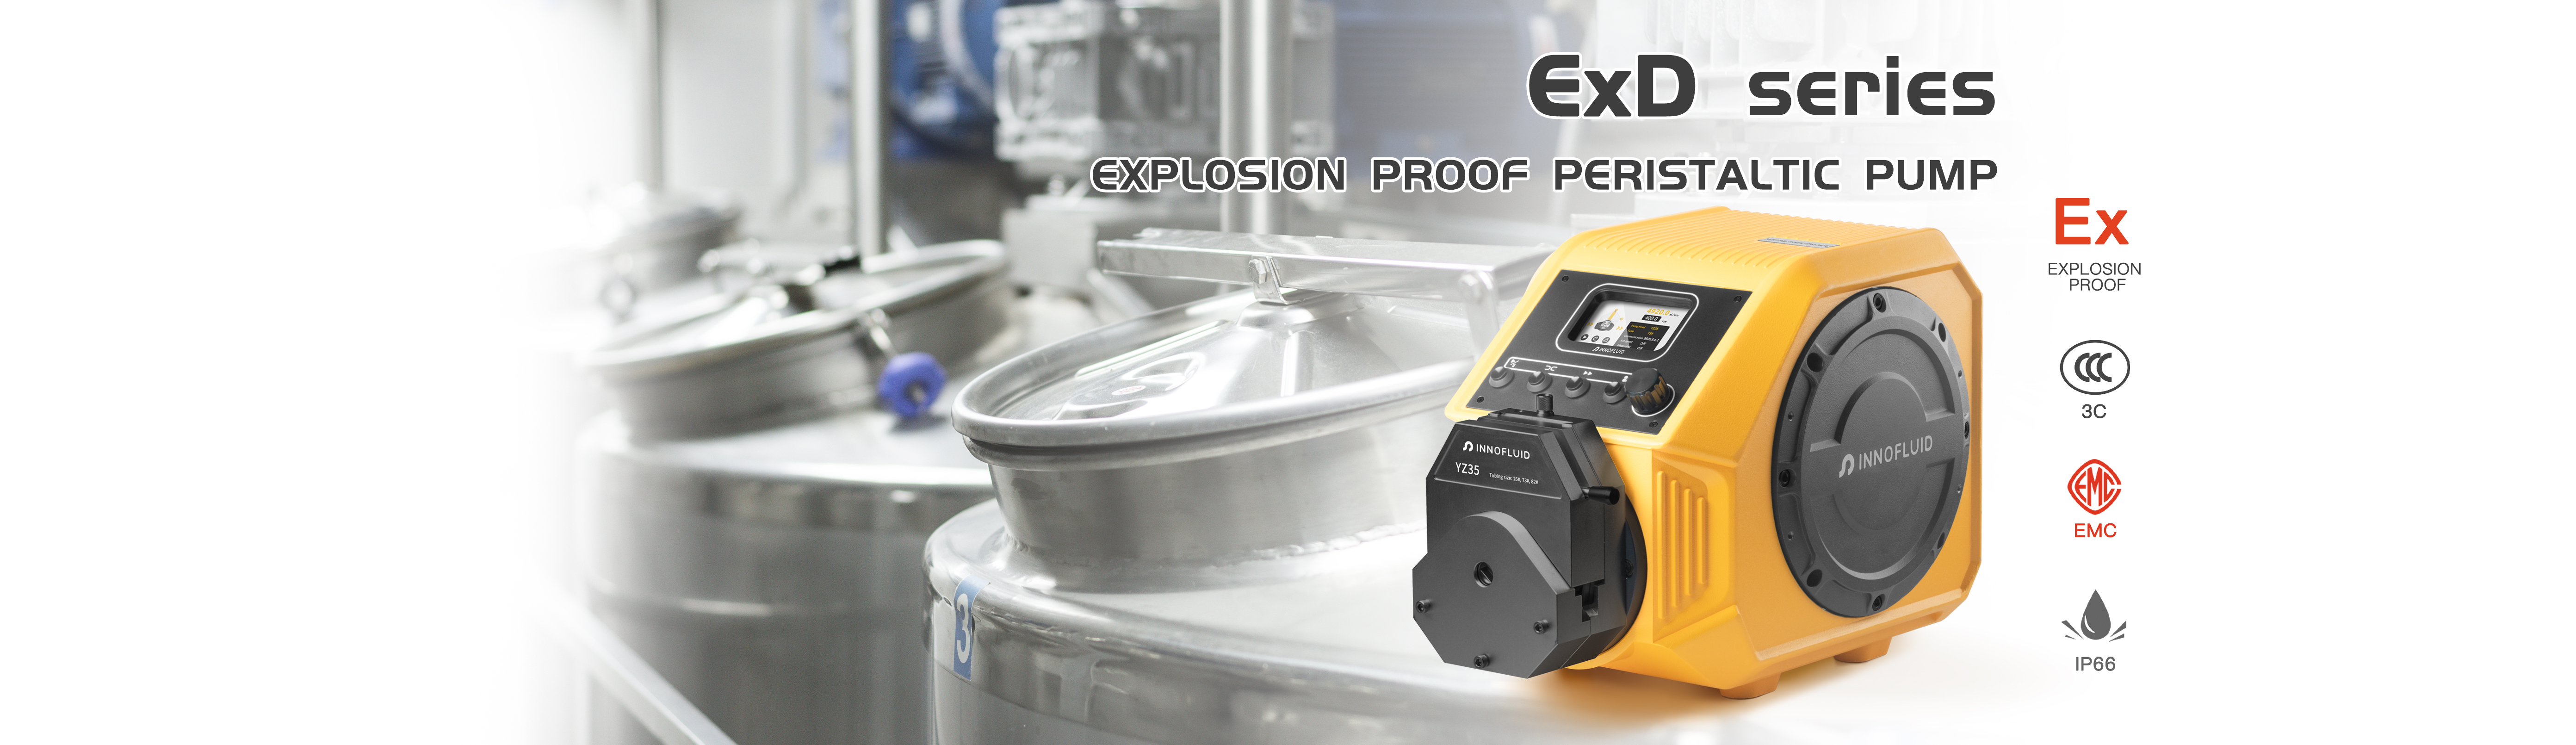 Explosion proof peristaltic pump